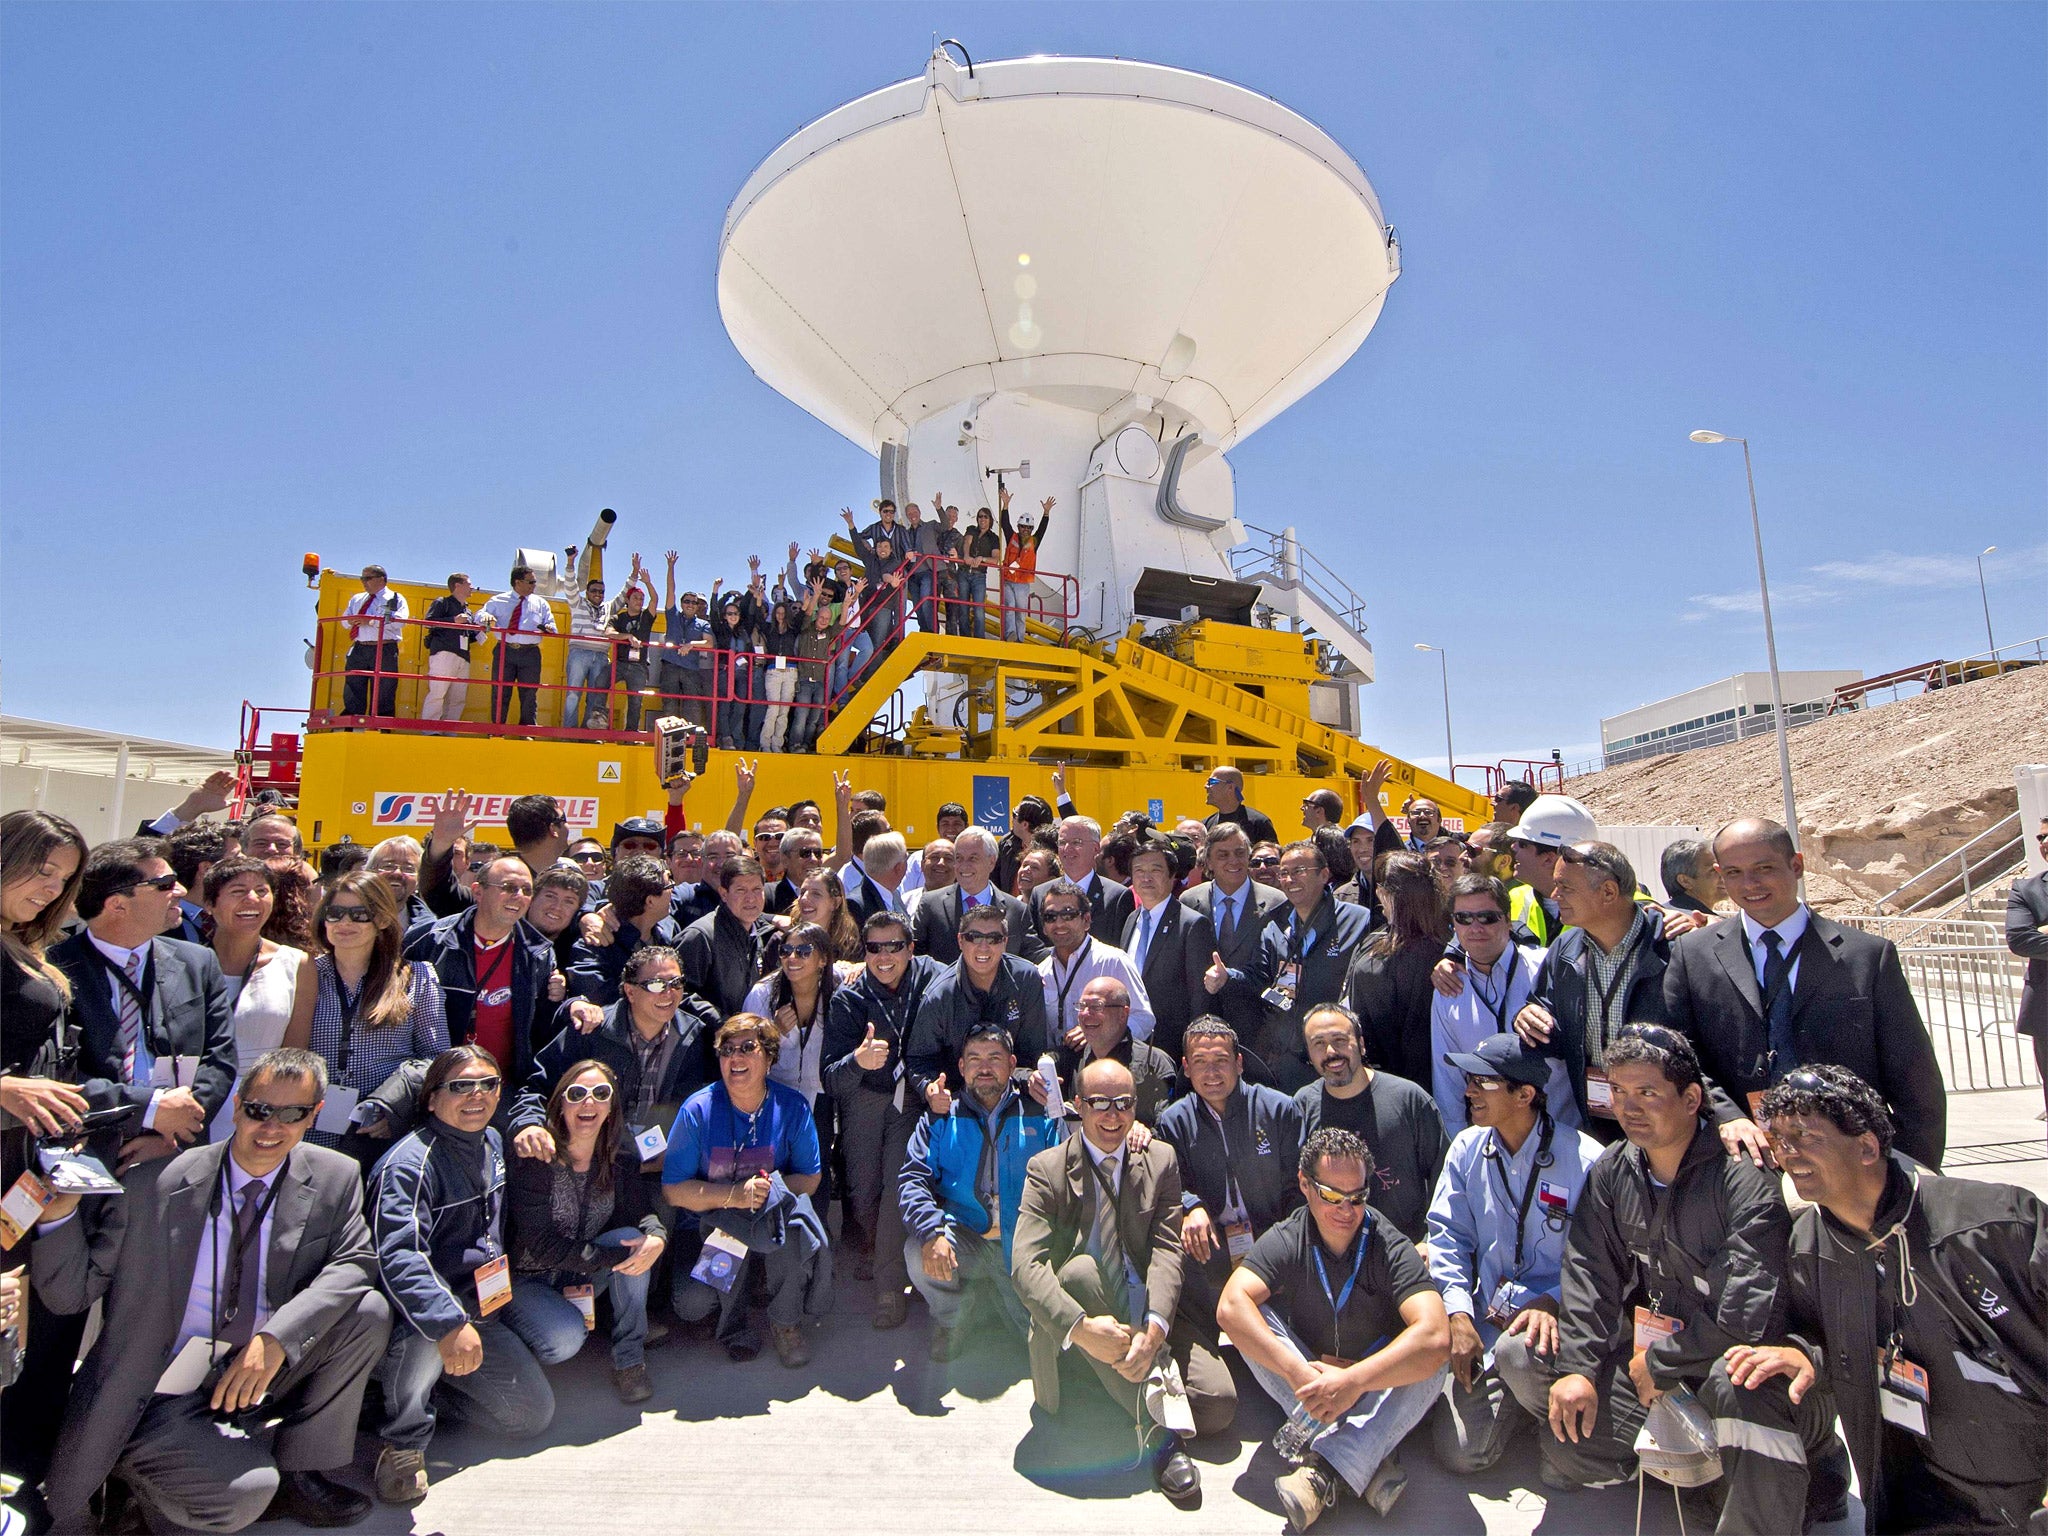 The ALMA Observatory was officially unveiled in the San Pedro de Atacama